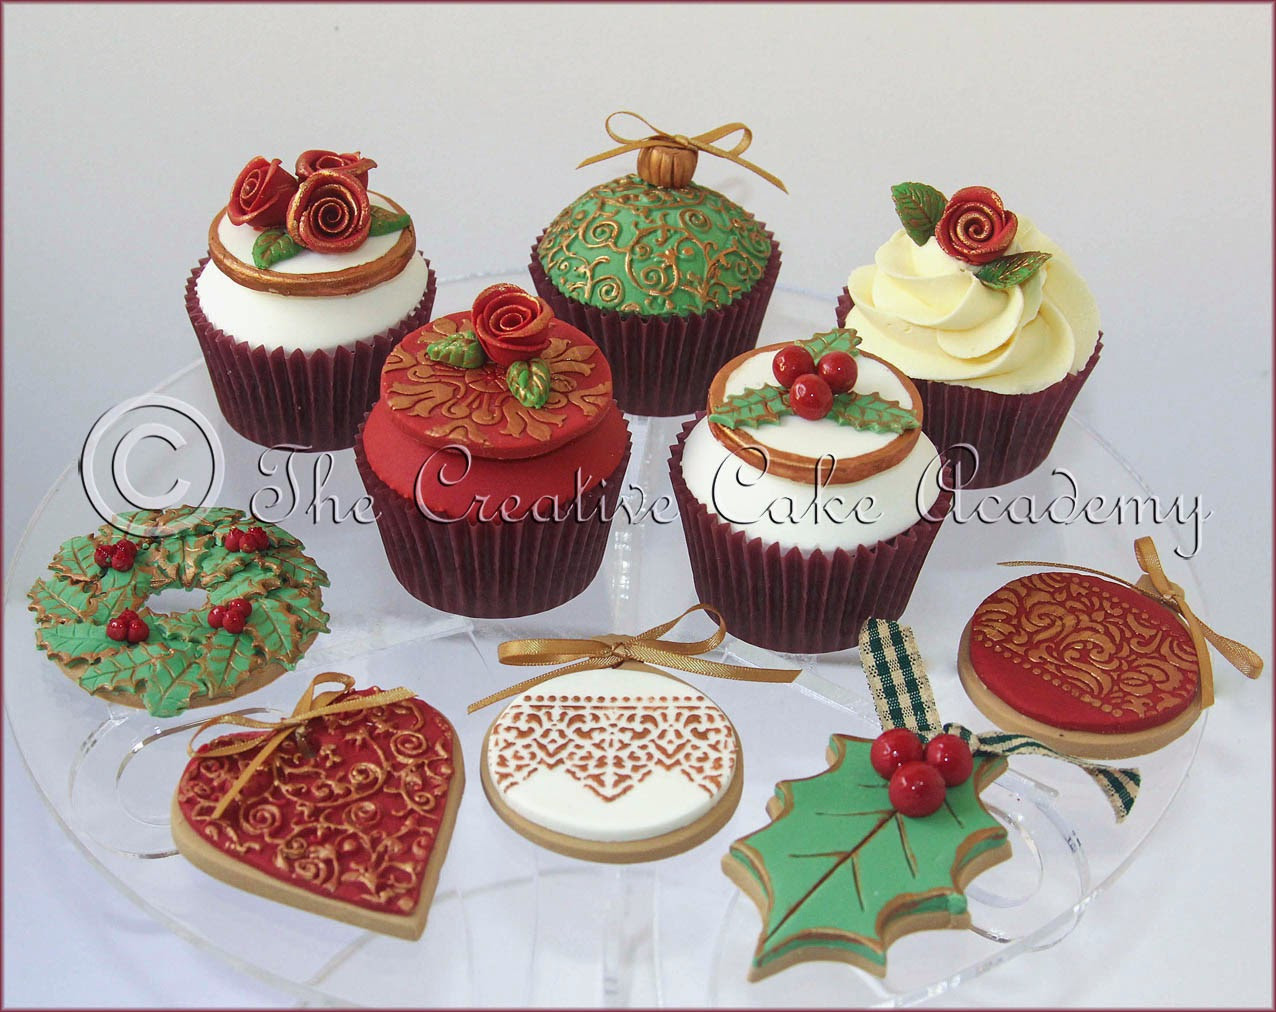 Christmas Cake And Cupcakes
 The Creative Cake Academy